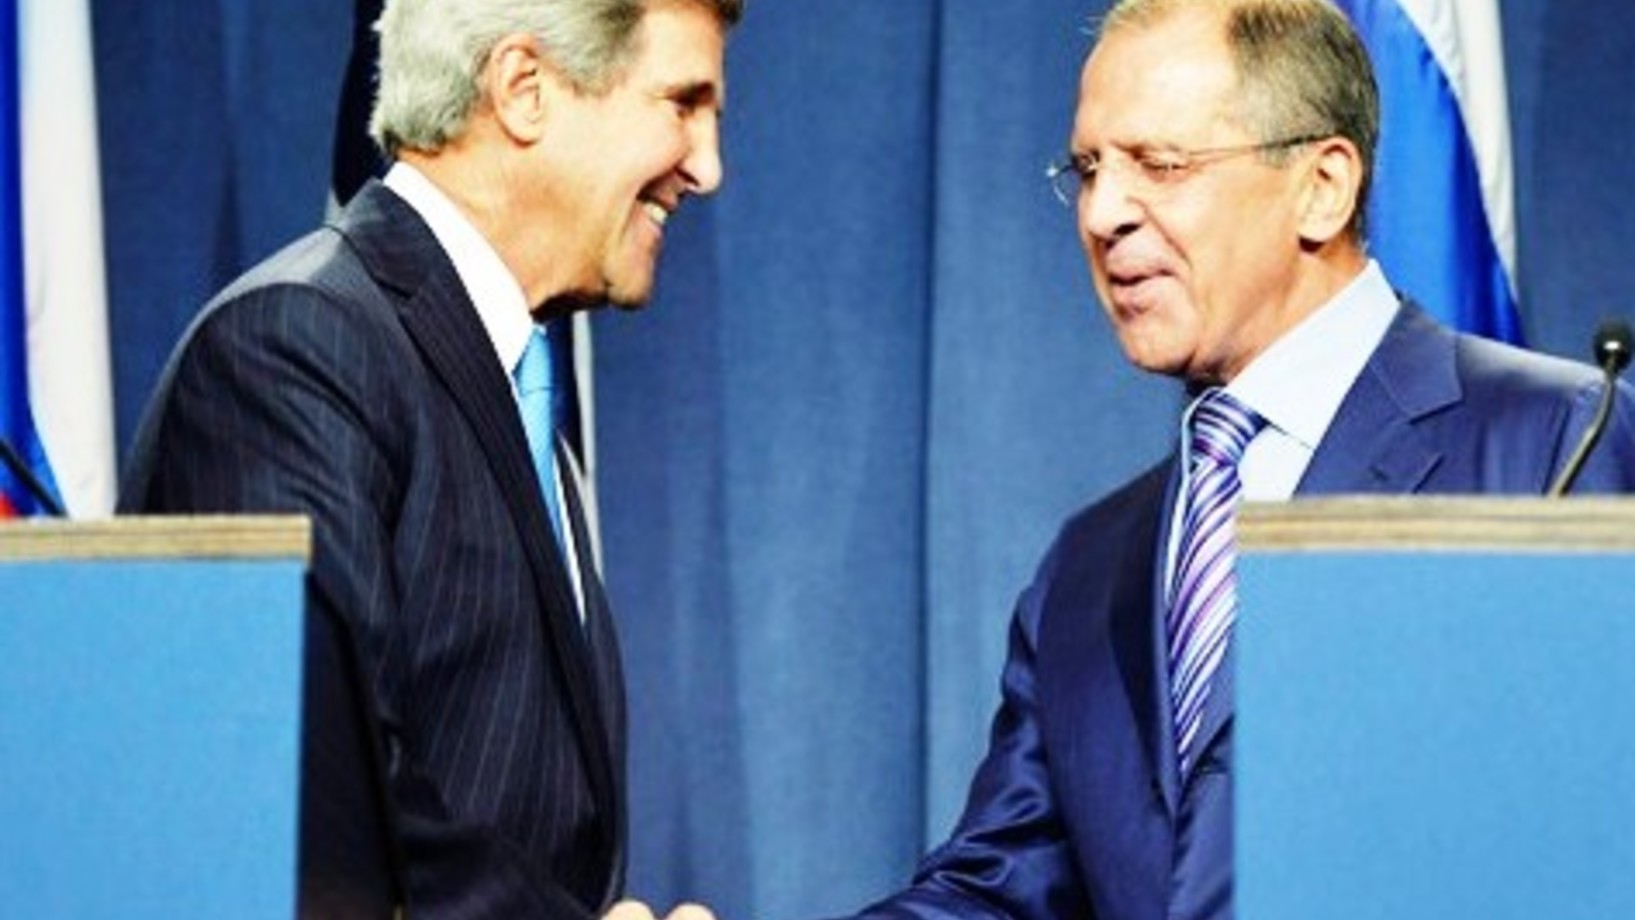 "We have a deal": Die Aussenminister Kerry und Lawrow am Samstag, 14. September 2013, in Genf 